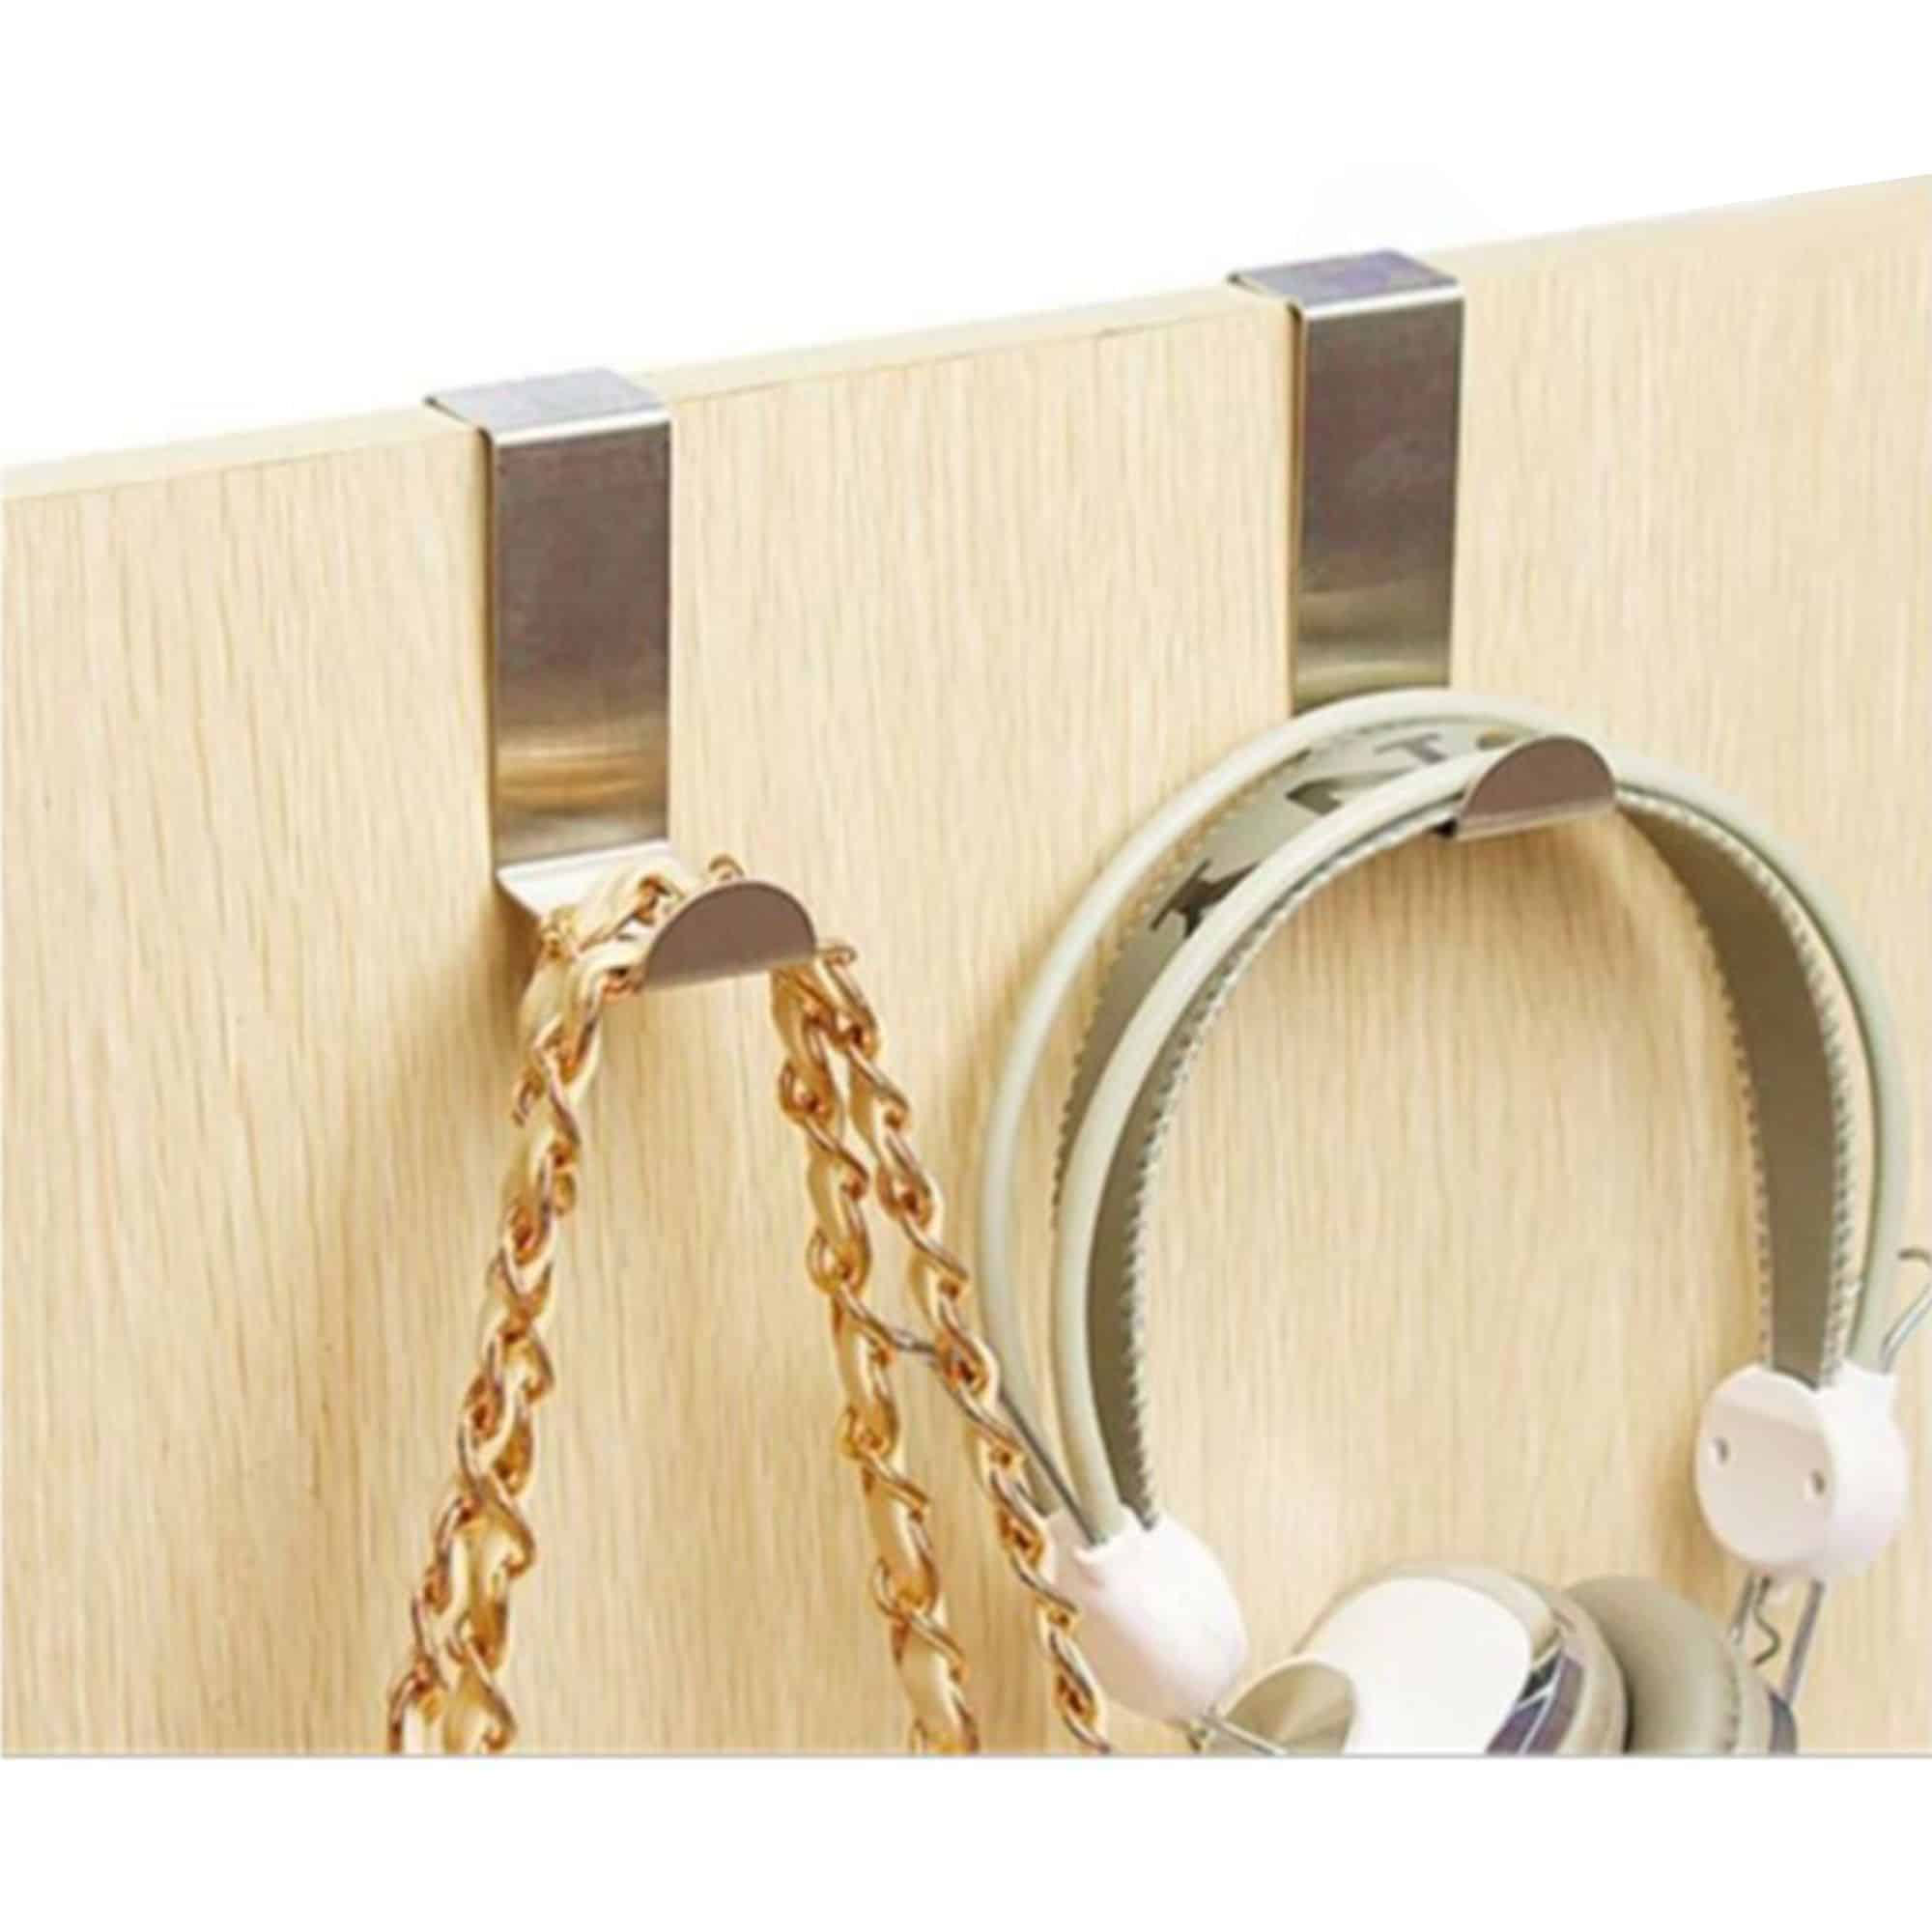 mutli purpose, hooks for necklaces, bracelets, beauty accessories